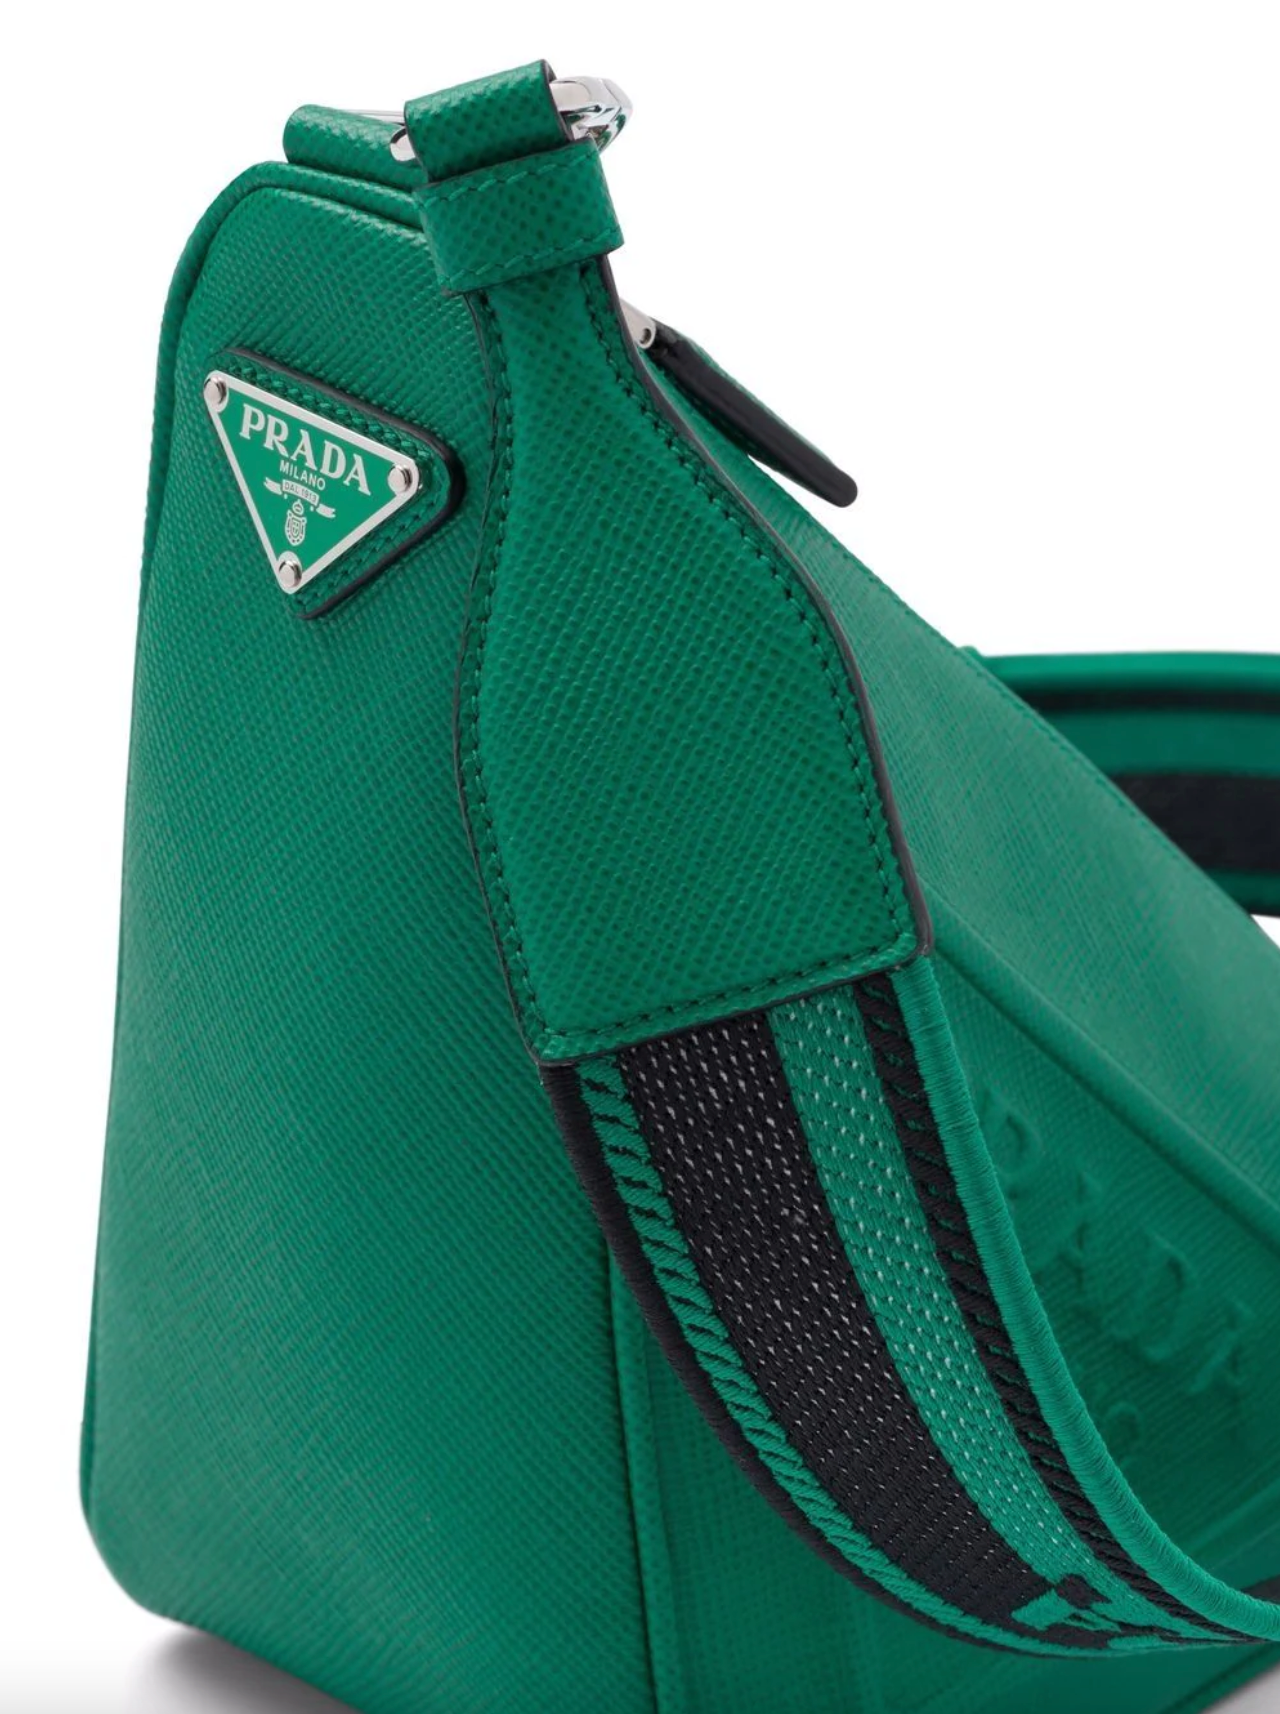 Prada Mint Green Re-Nylon Re-edition 2005 Bag Limited Edition